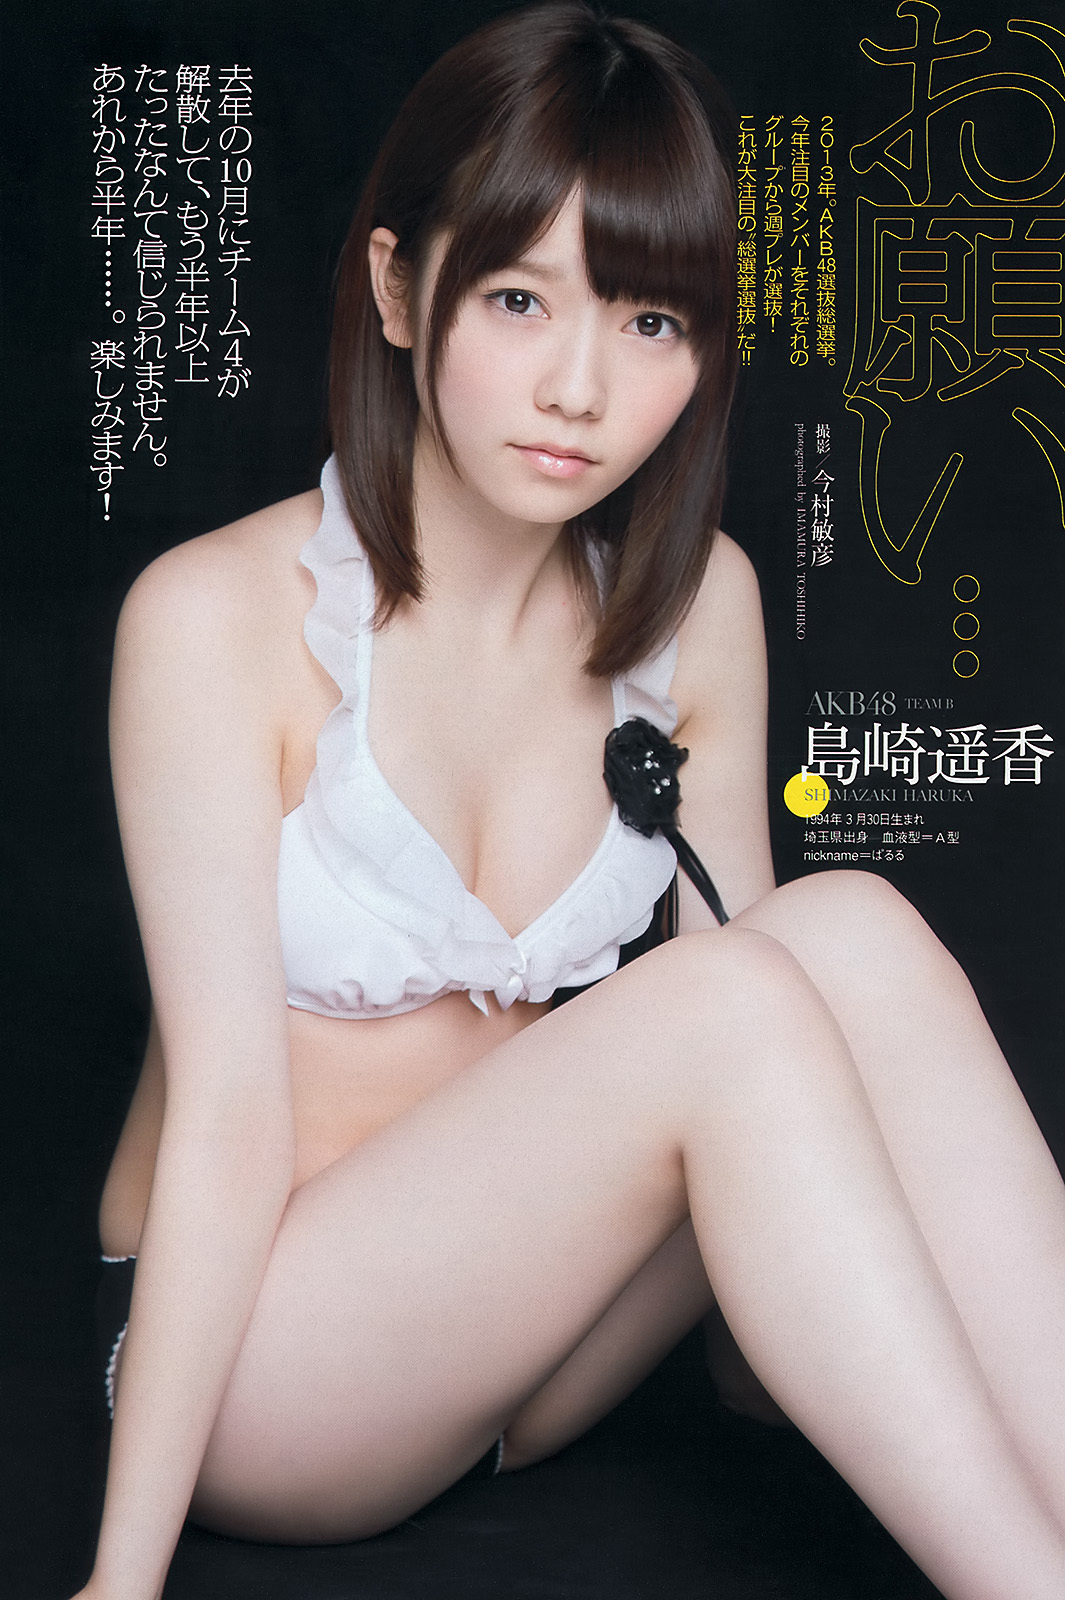 [weekly Playboy] No.24 Asaka Shimazaki Asahi saki